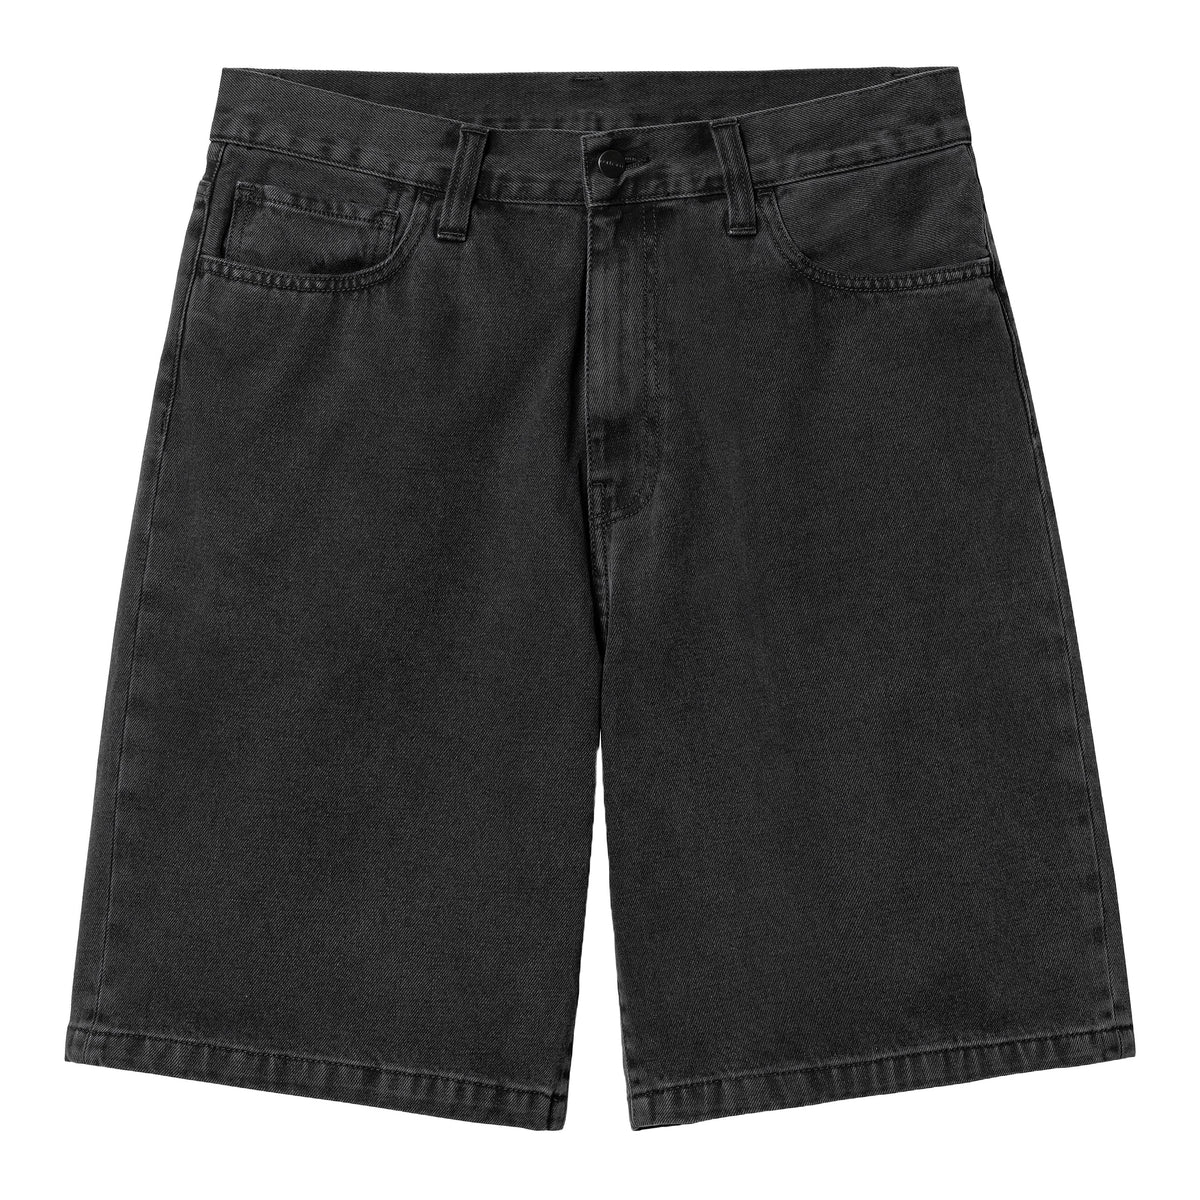 Carhartt Wip Landon men's jeans shorts black